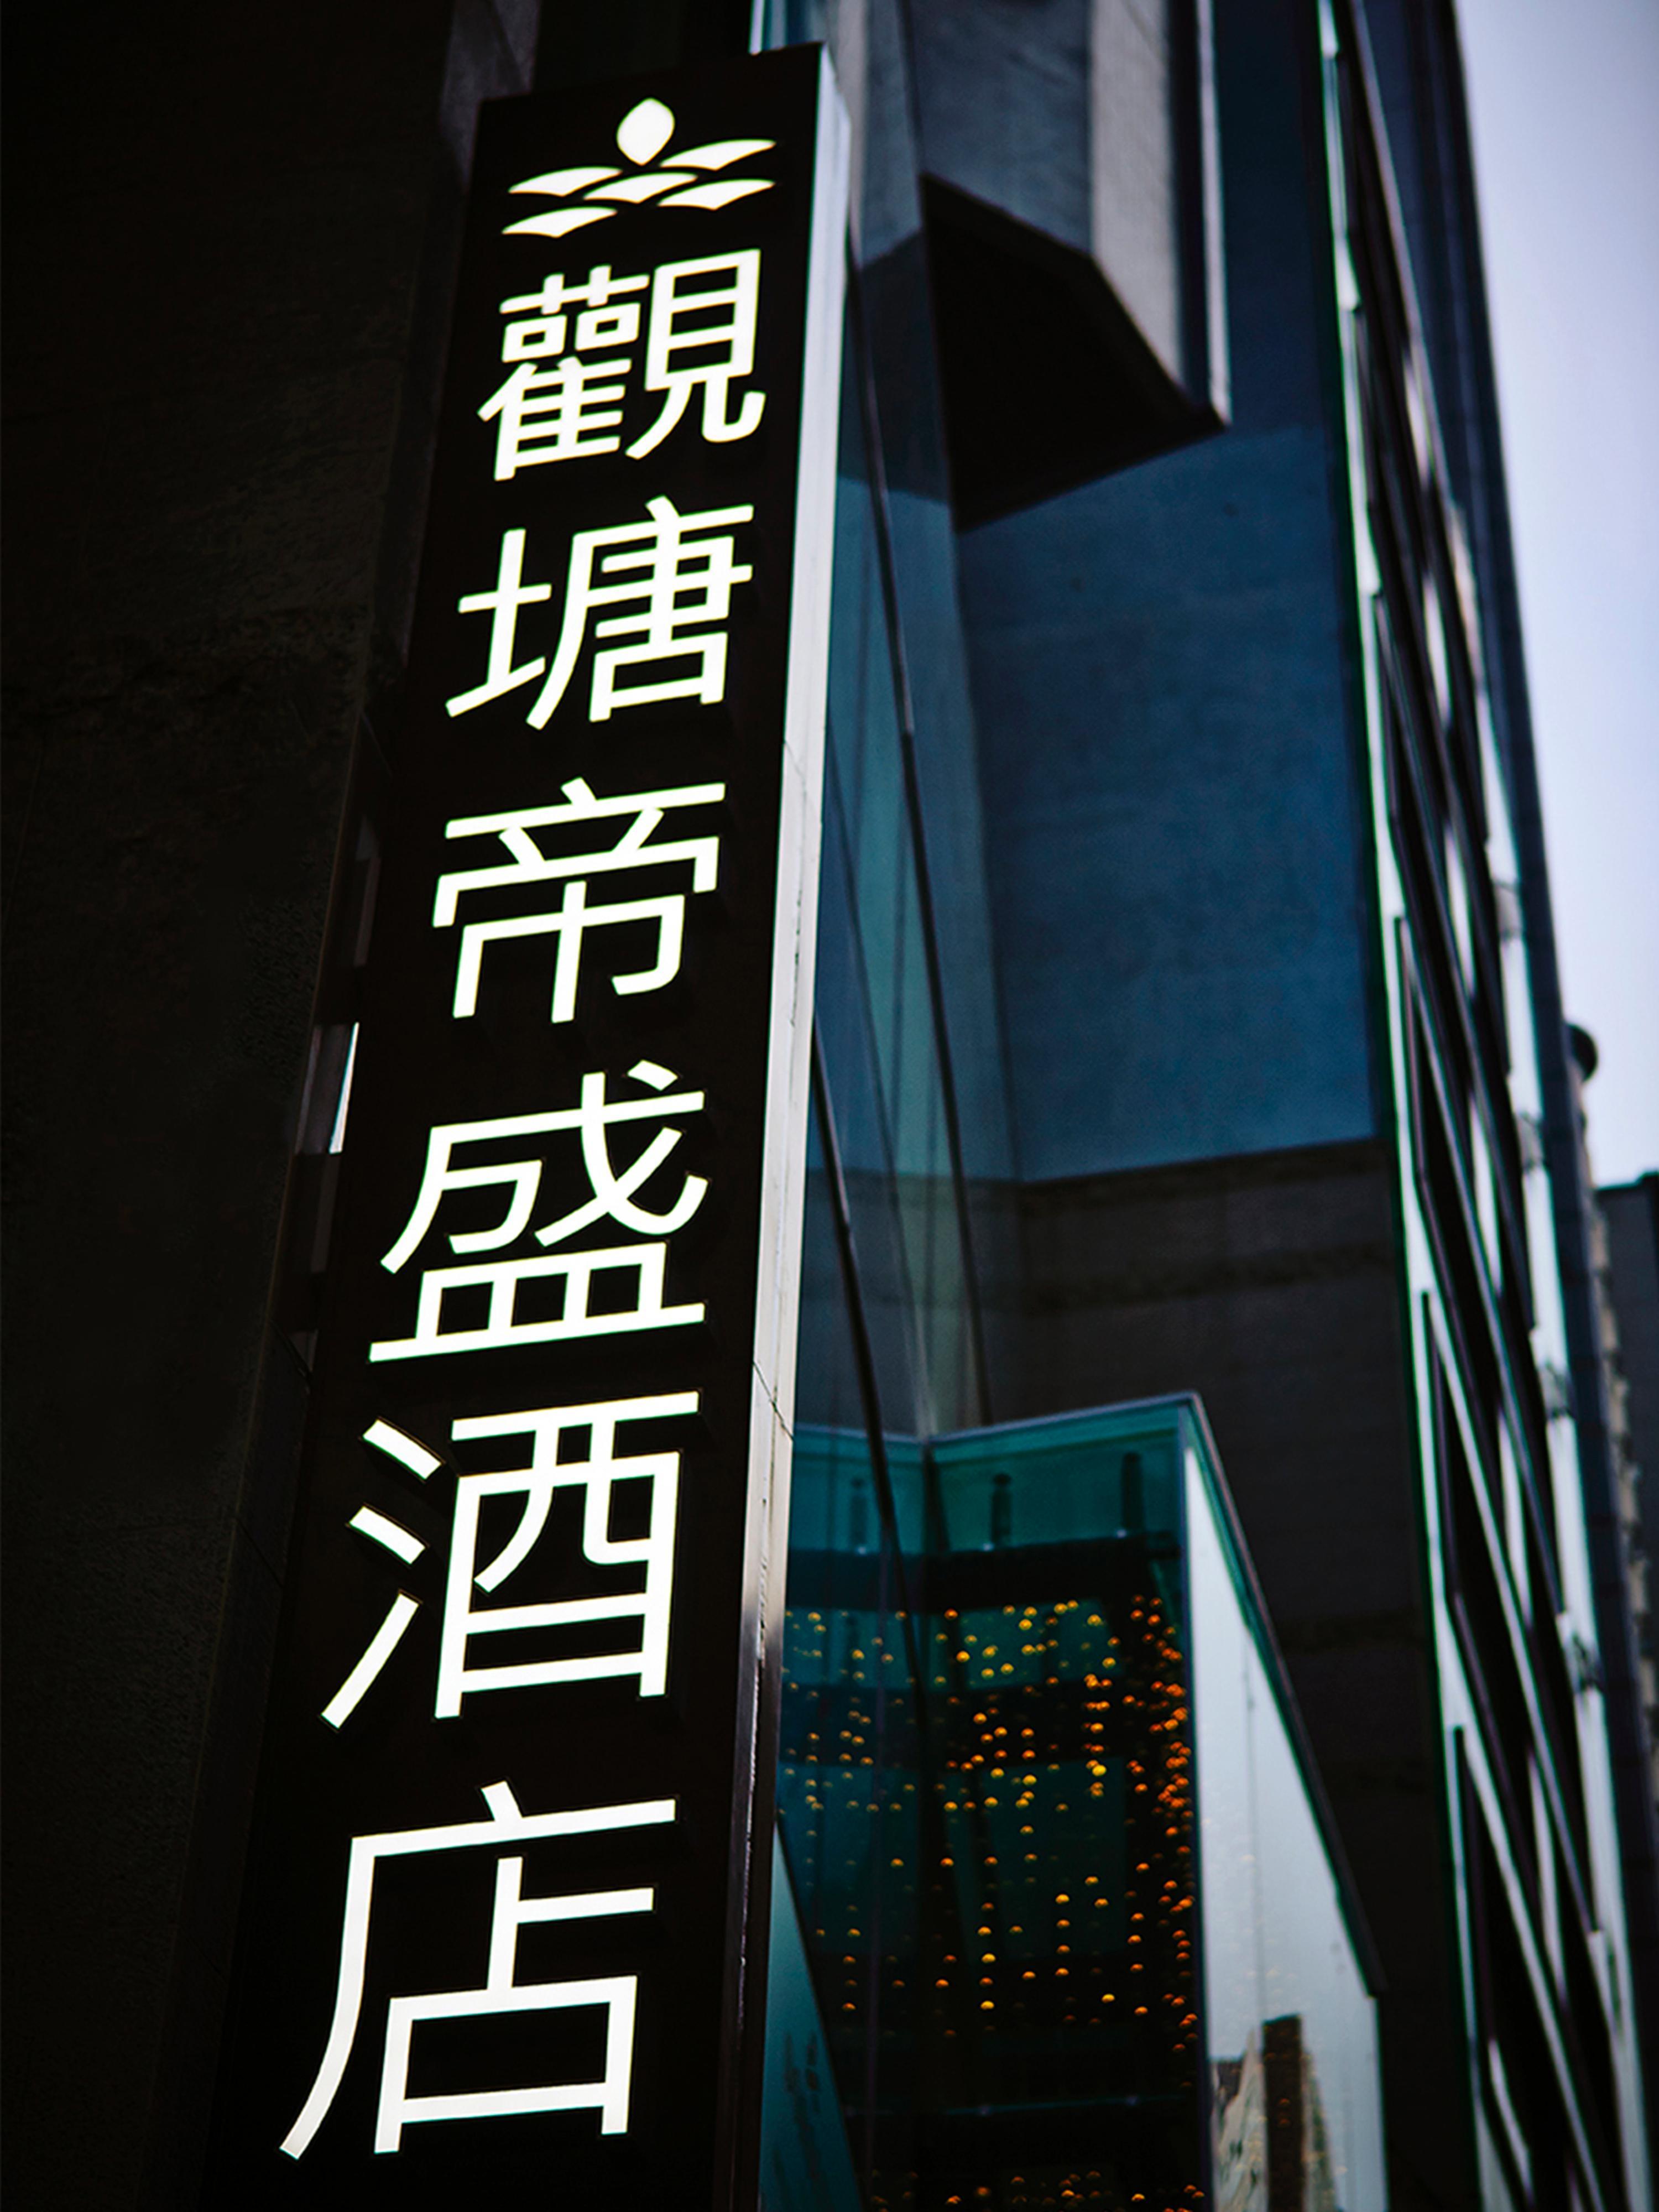 Dorsett Kwun Tong, Hong Kong Hotel Exterior photo